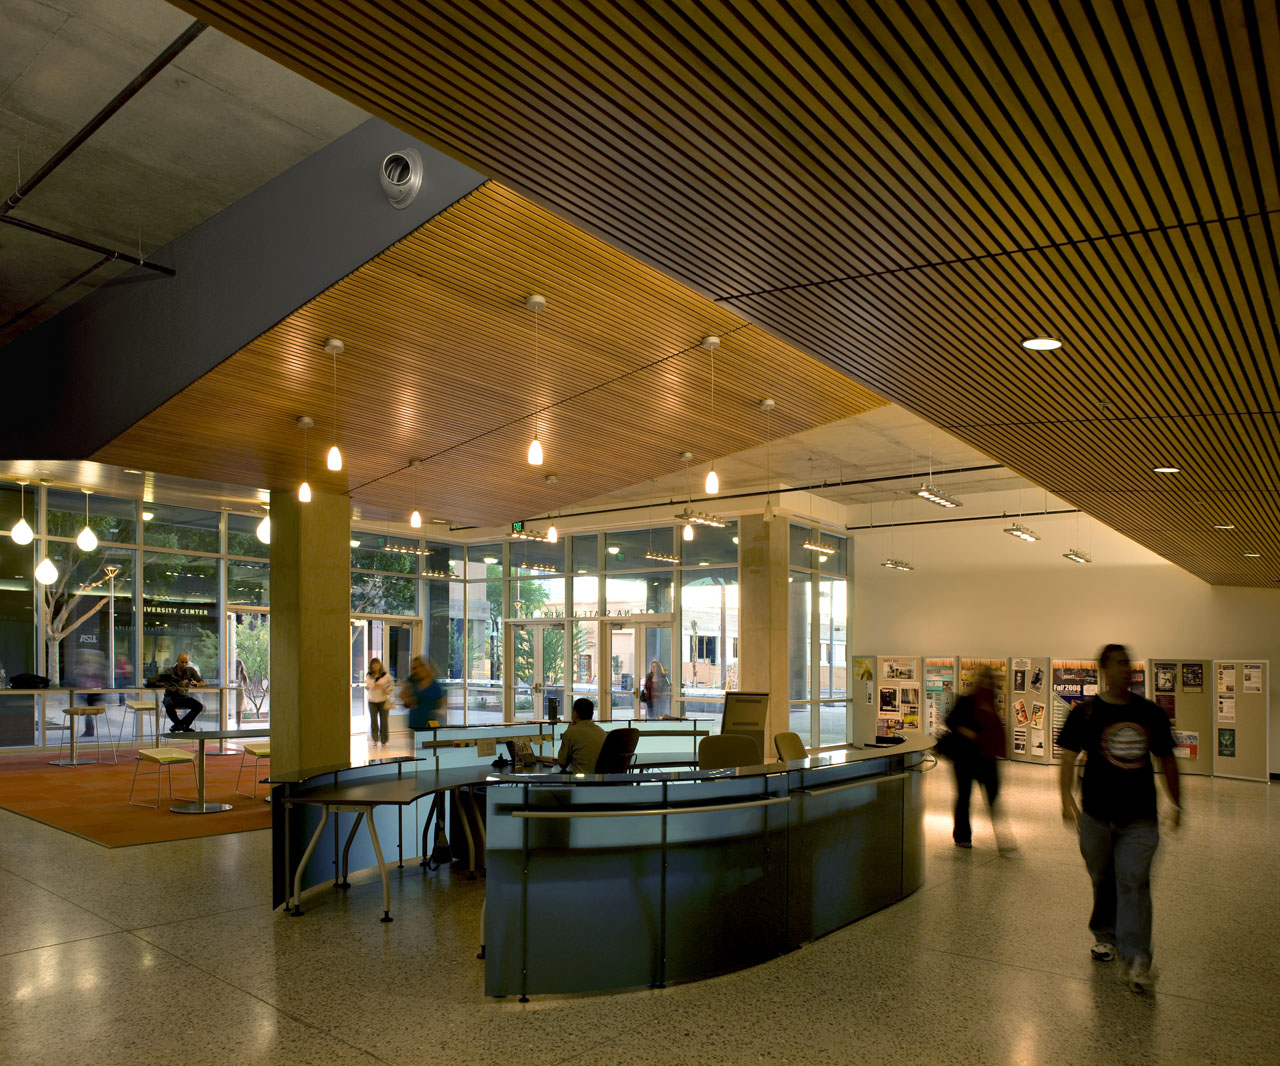 The interior of Arizona State University's Walter Cronkite School of Journalism by Ehrlich Architects